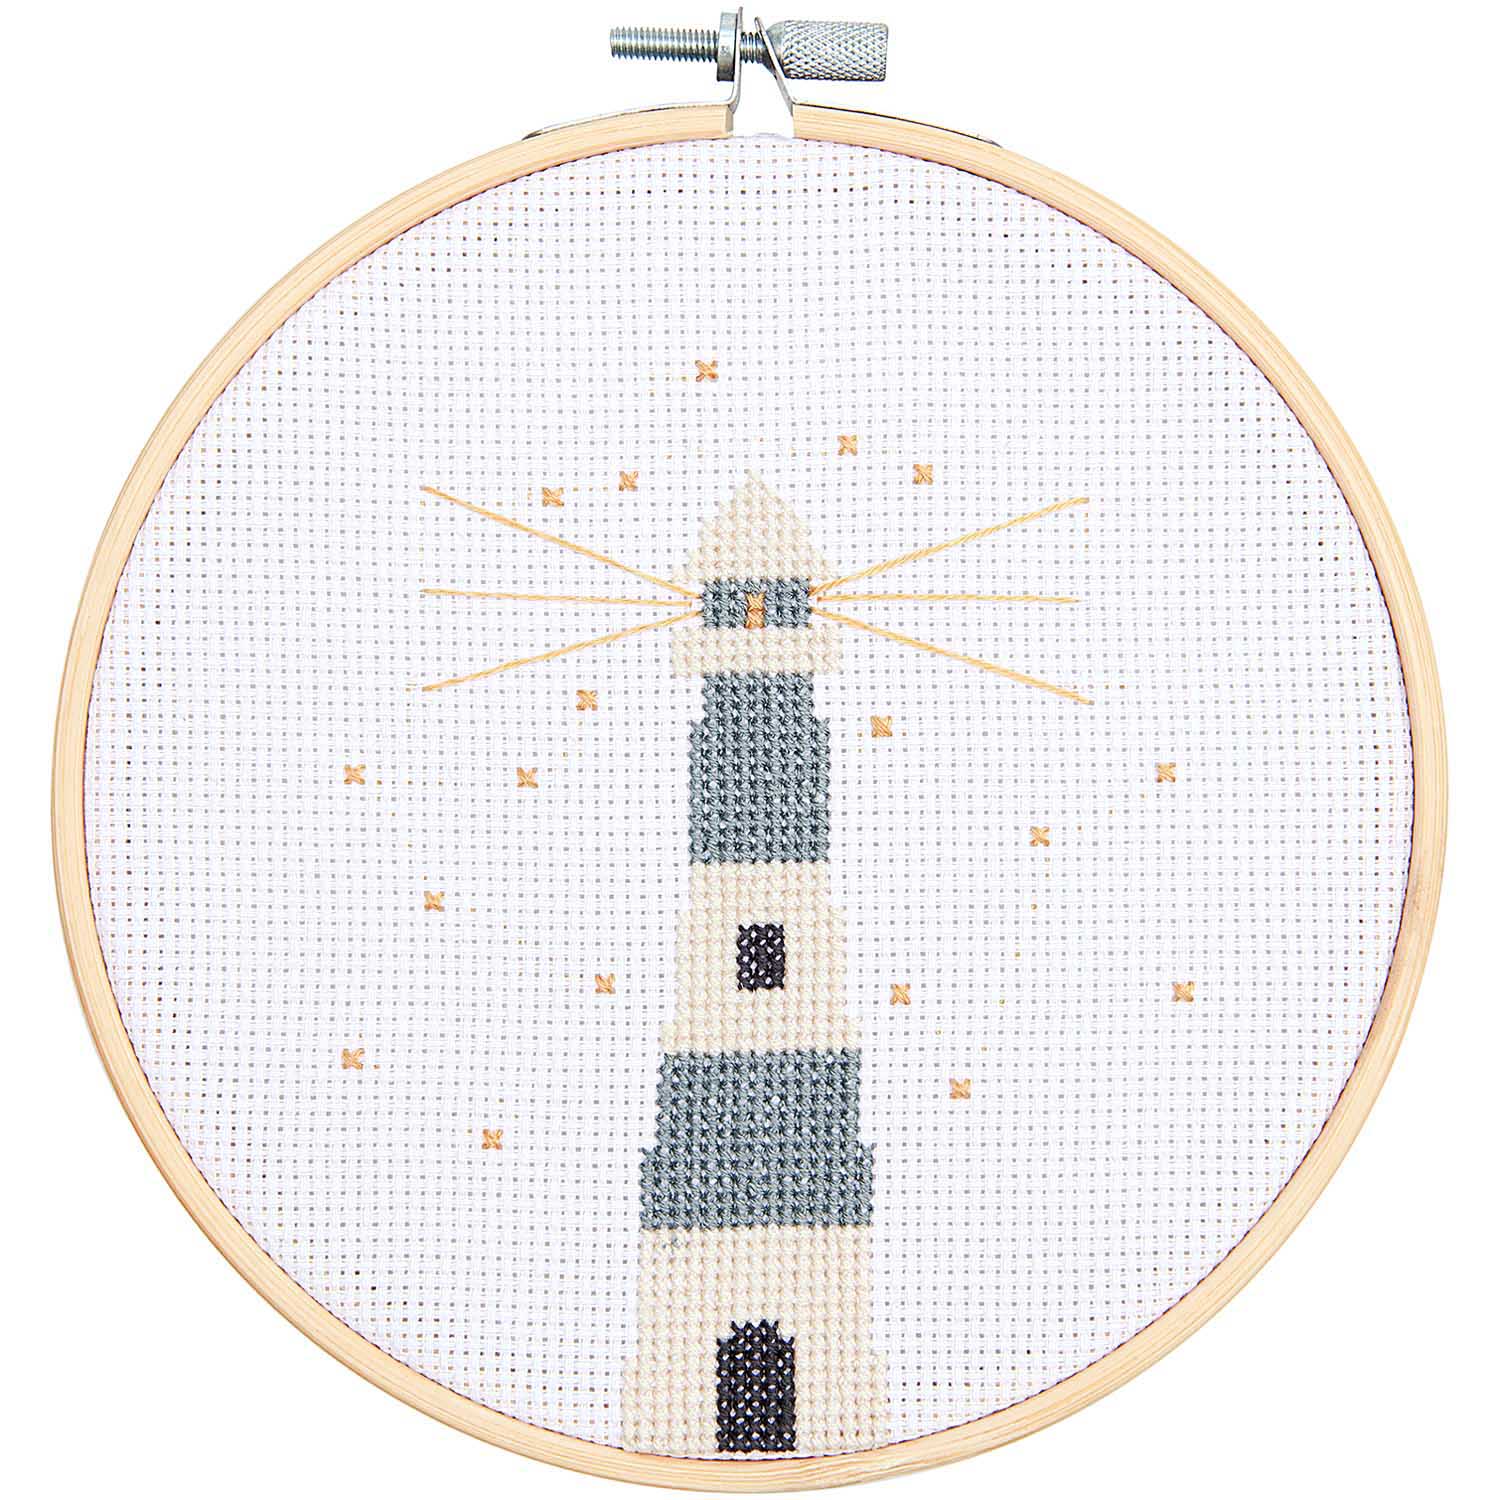 NEW SEALED Artiste Mini Cross-Stitch Kit - # 981498